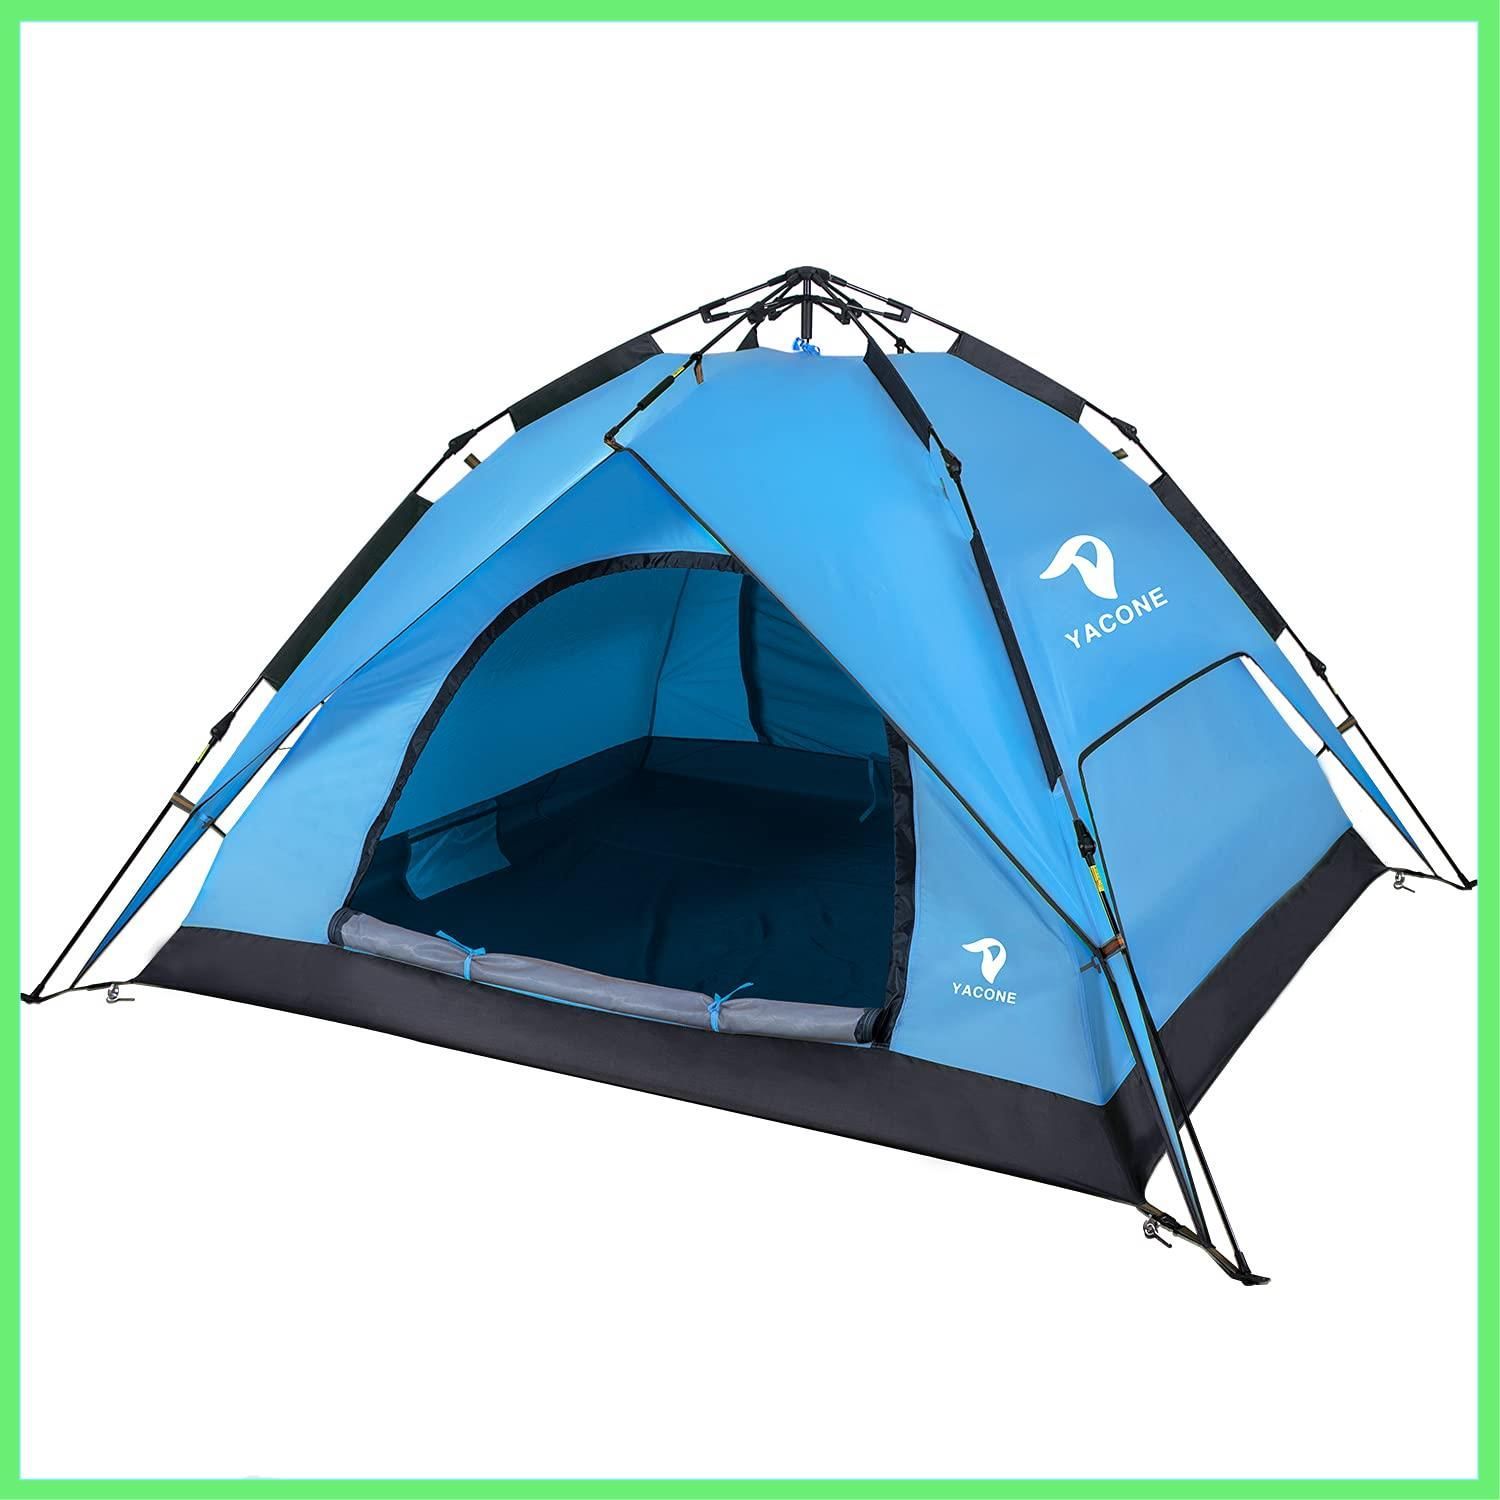 ◇YACONE テント ワンタッチテント 3～4人用 2WAY テント 二重層 設営